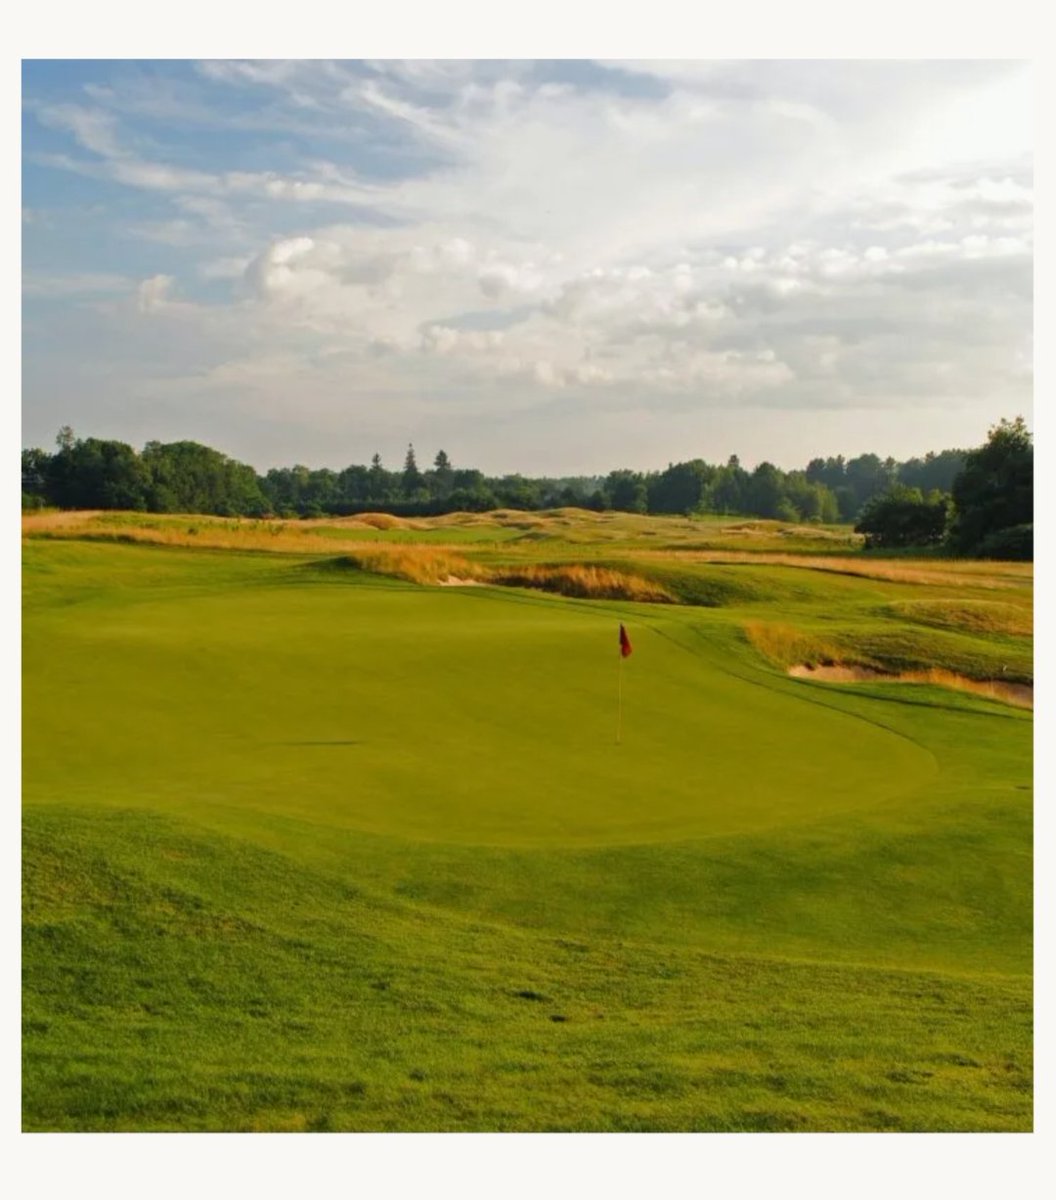 A new 18-hole golf course to be planned 4.5 miles near the Augusta National Golf Club

dktsports.com/latest-news.as…

#DKTSports
#AugustaNationalGolfClub #CypressShoals #NorthAugusta #SavannahRiver #SumterNationalForest #Masters #MastersTournament #Georgia #Golf